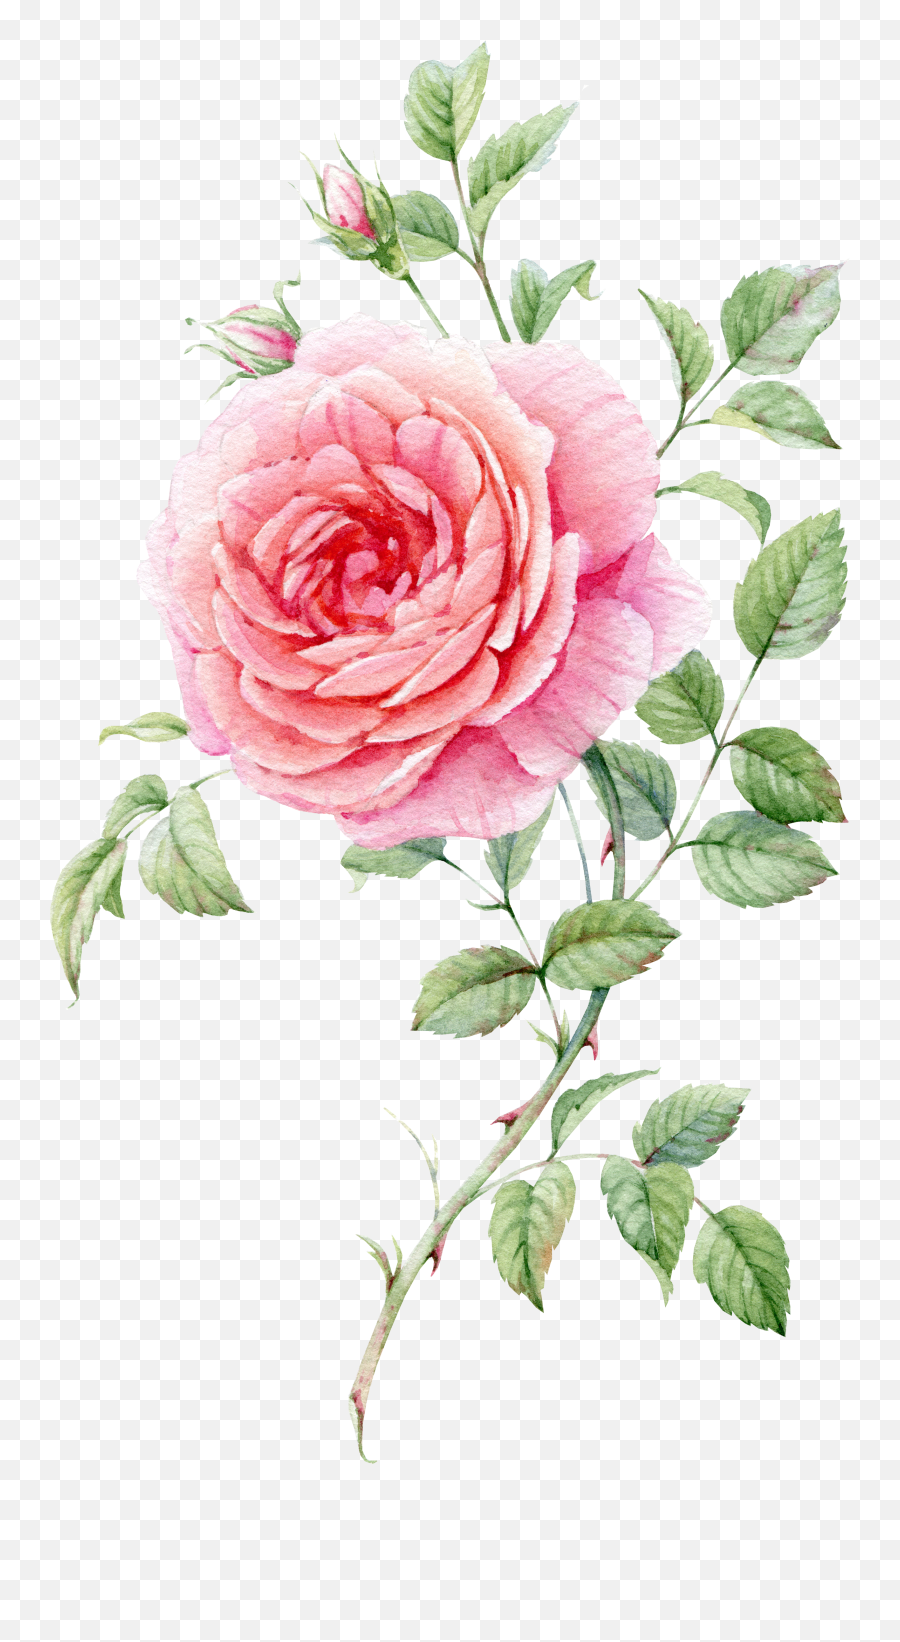 1 Blooming Rose Watercolor - Rose Watercolor Flower Painting Png ...